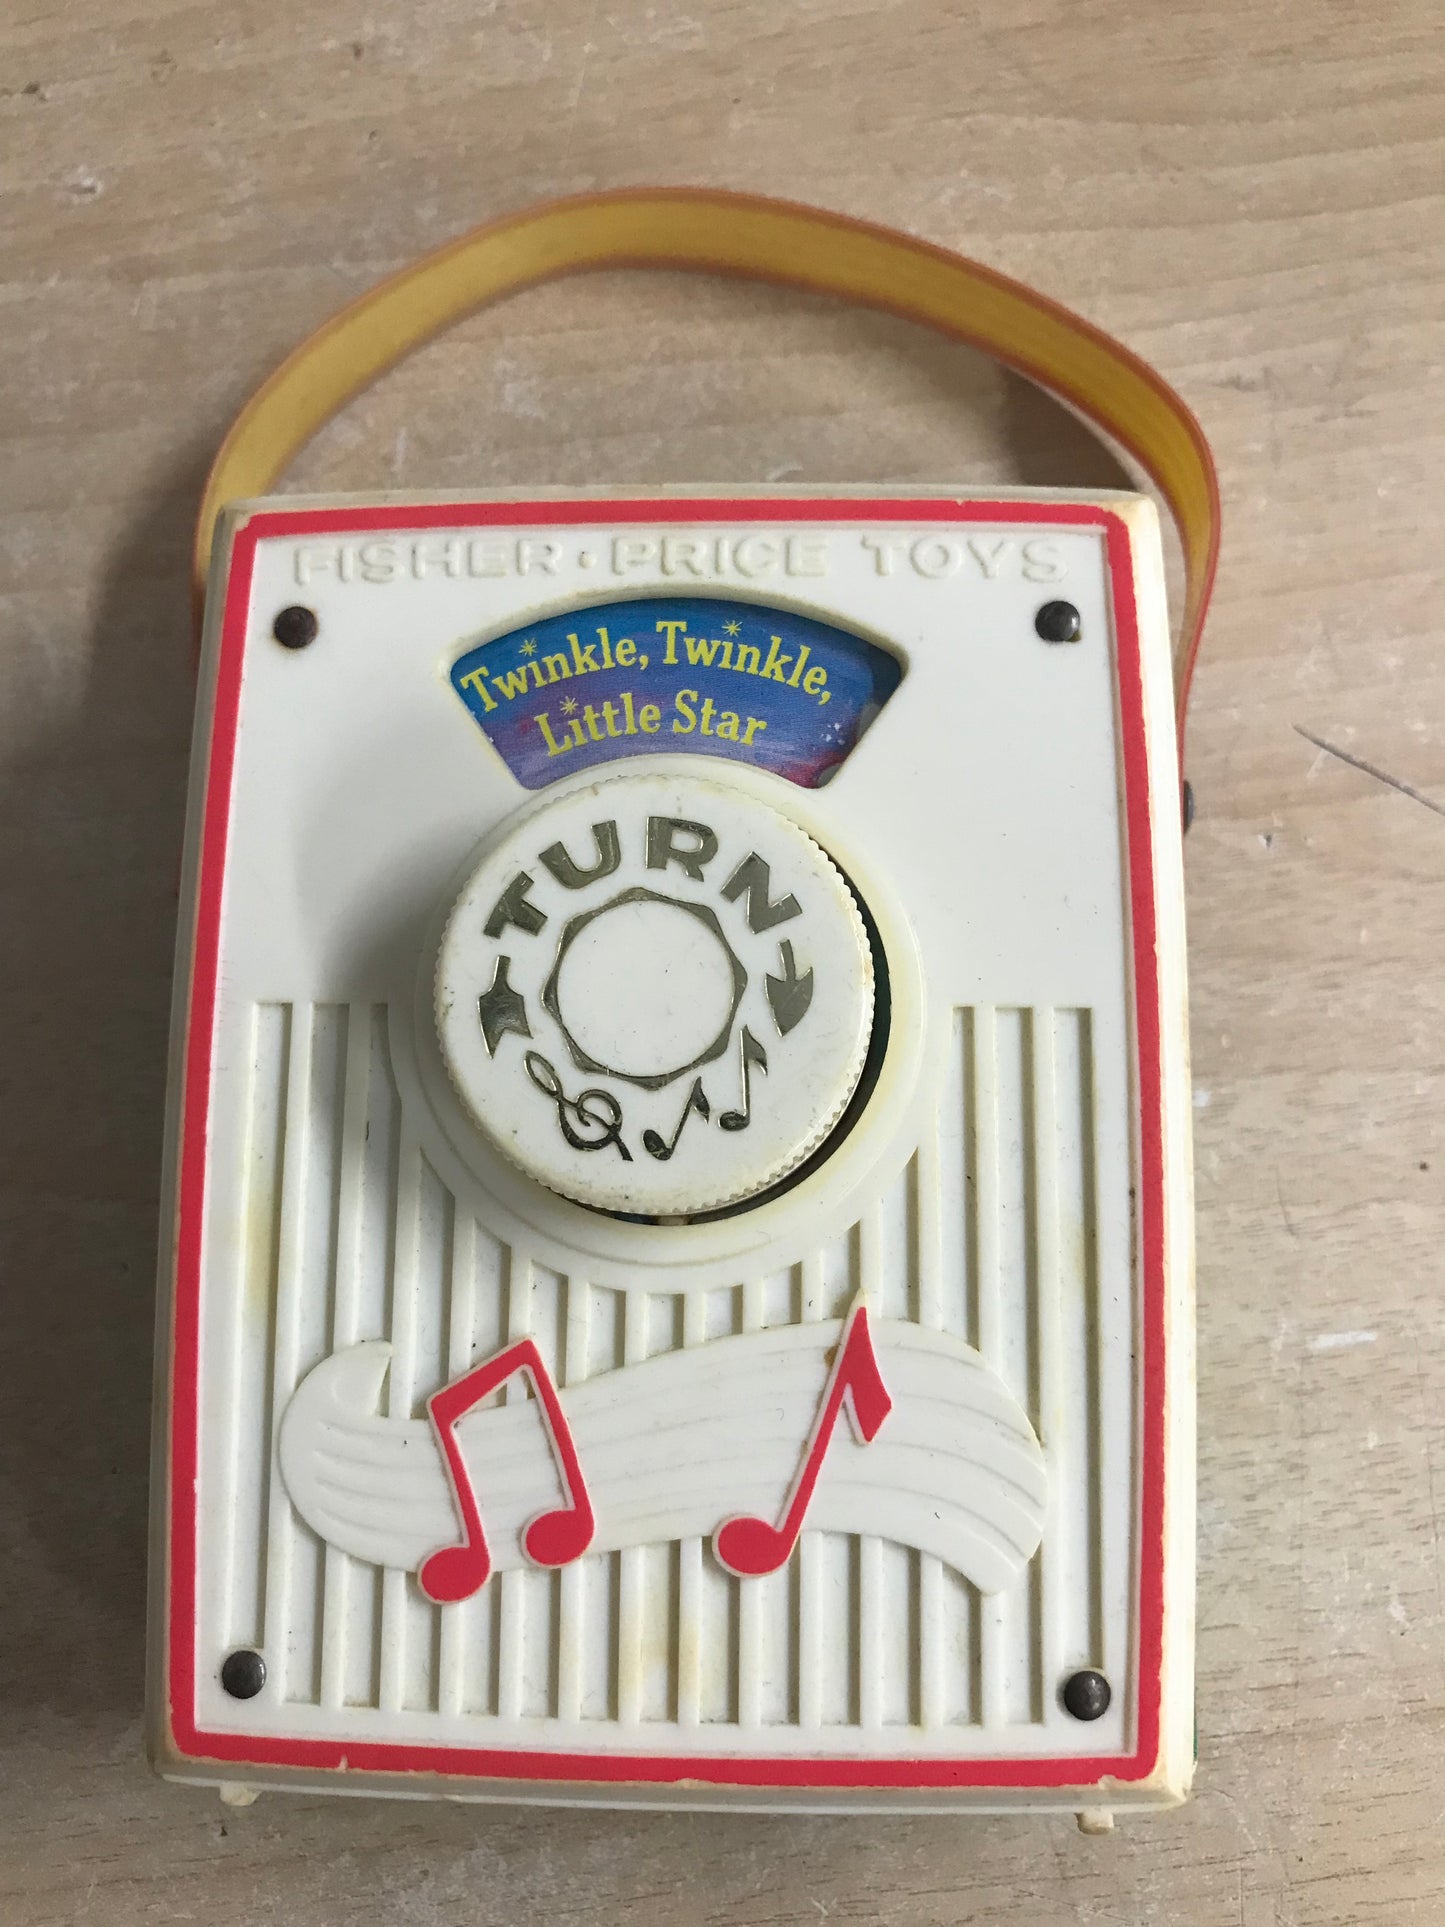 Fisher Price Vintage 1977 Music Box Pocket Radio Twinkle Twinkle Little Star Works Great Wood Plastic